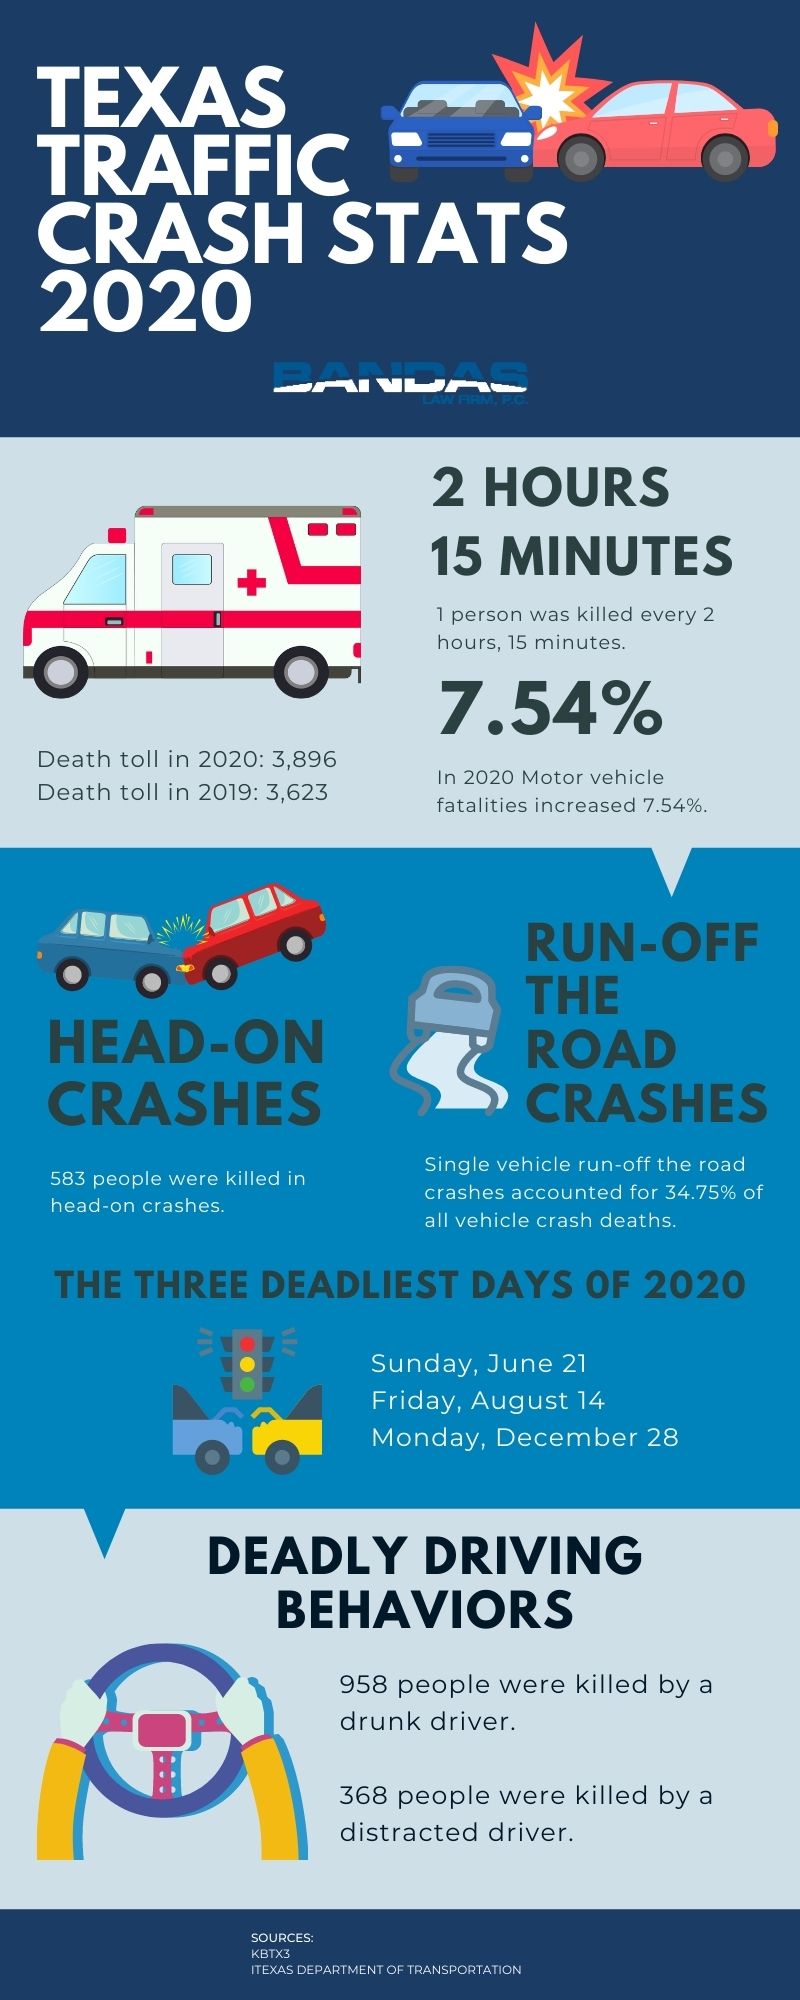 Texas Traffic Crash Stats 2020